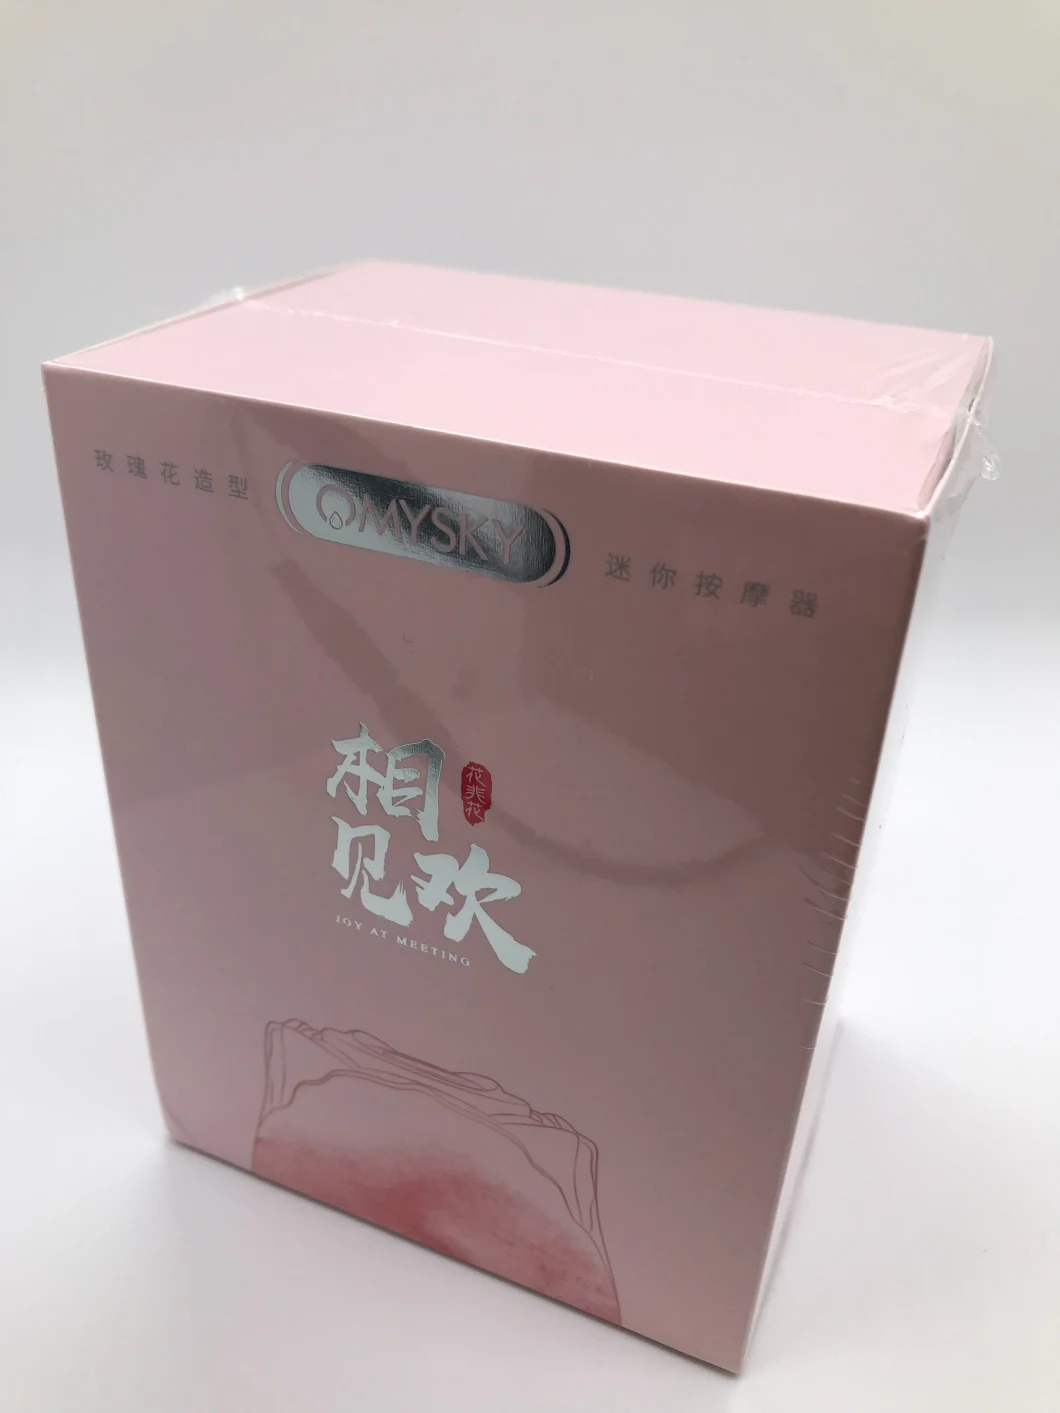 Amazon Hot Selling Rose Sucker Vibrator Sex Toy Nipple Stimulator Clit Sucker Adult Sex Toy